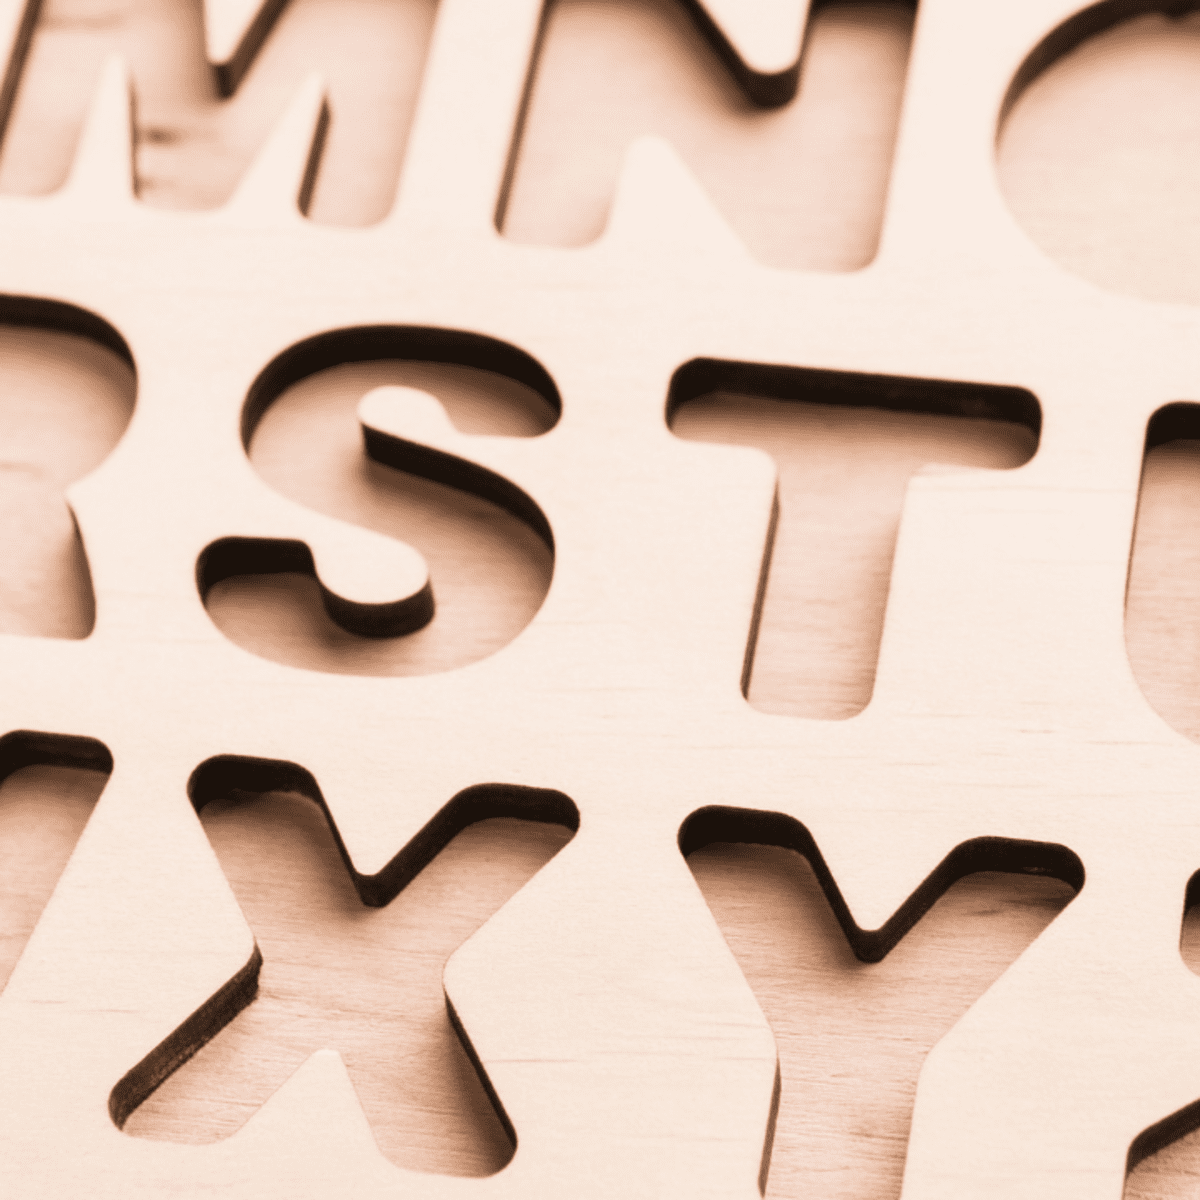 cursive letter m stencil